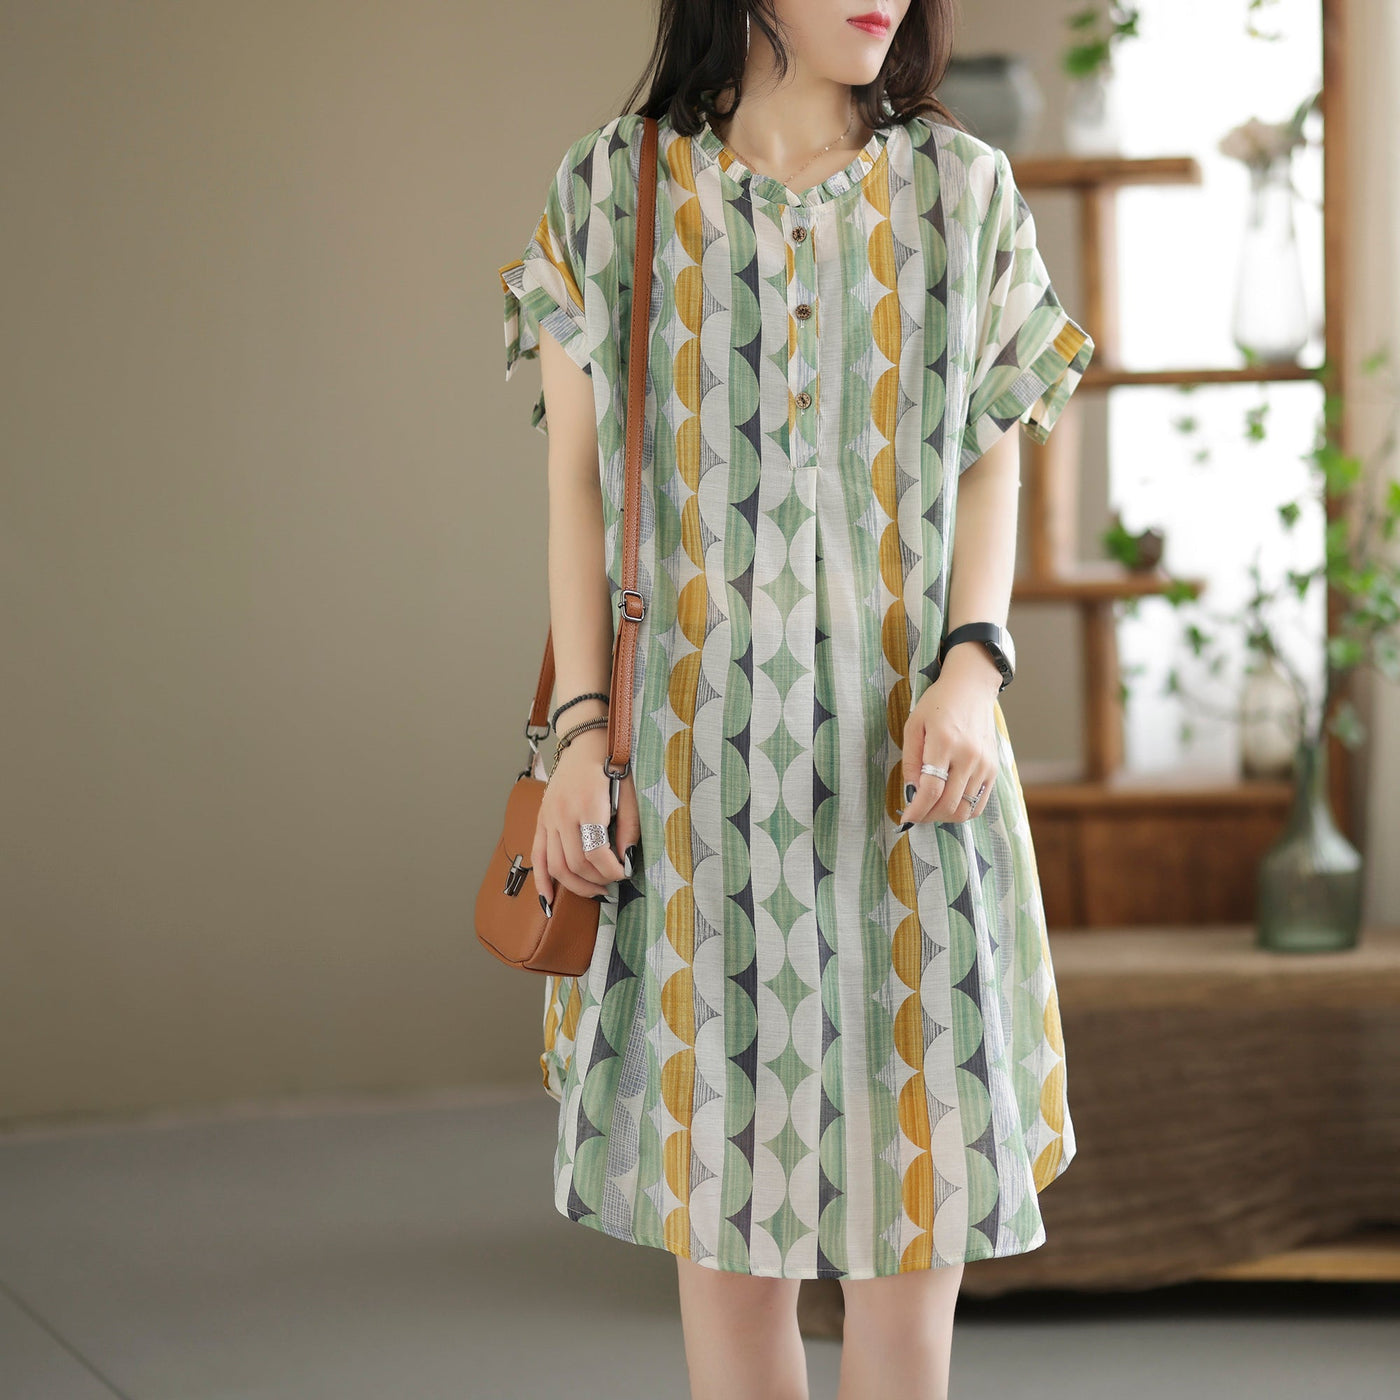 Summer Retro Printed Casual Linen Mini Dress Jun 2022 New Arrival L Yellow / Green 